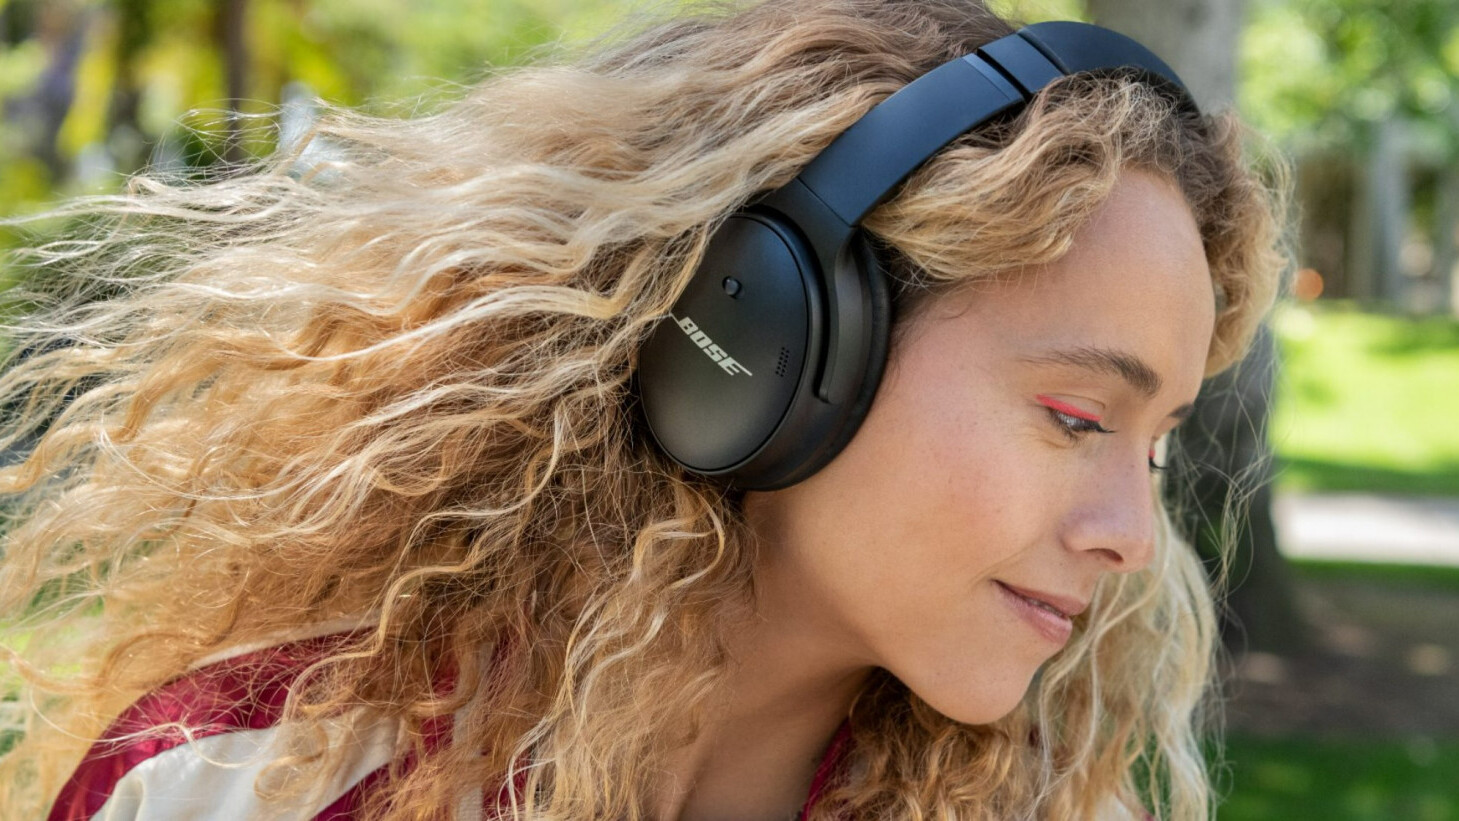 Bose’s QuietComfort 45 headphones cancel more noise and last longer